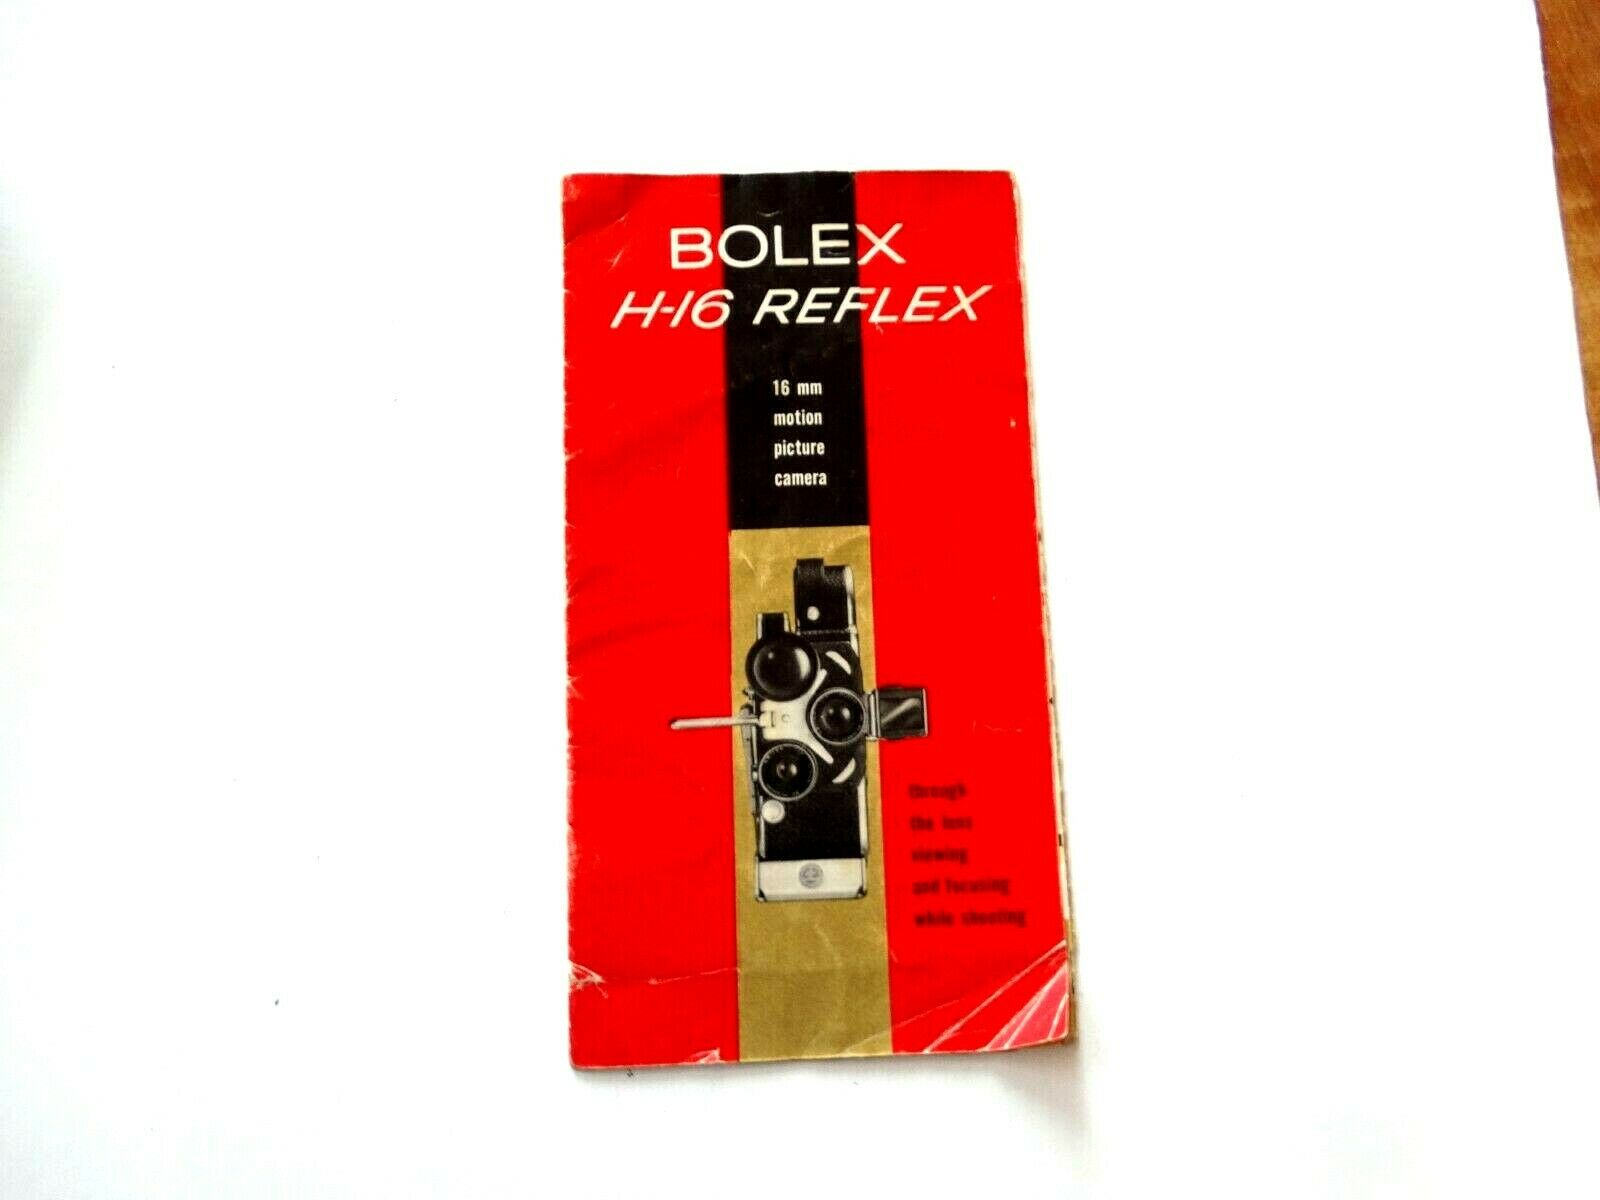 Bolex Paillard H16 Reflex Movie Camera Brochure – Late 1950s/early 1960s